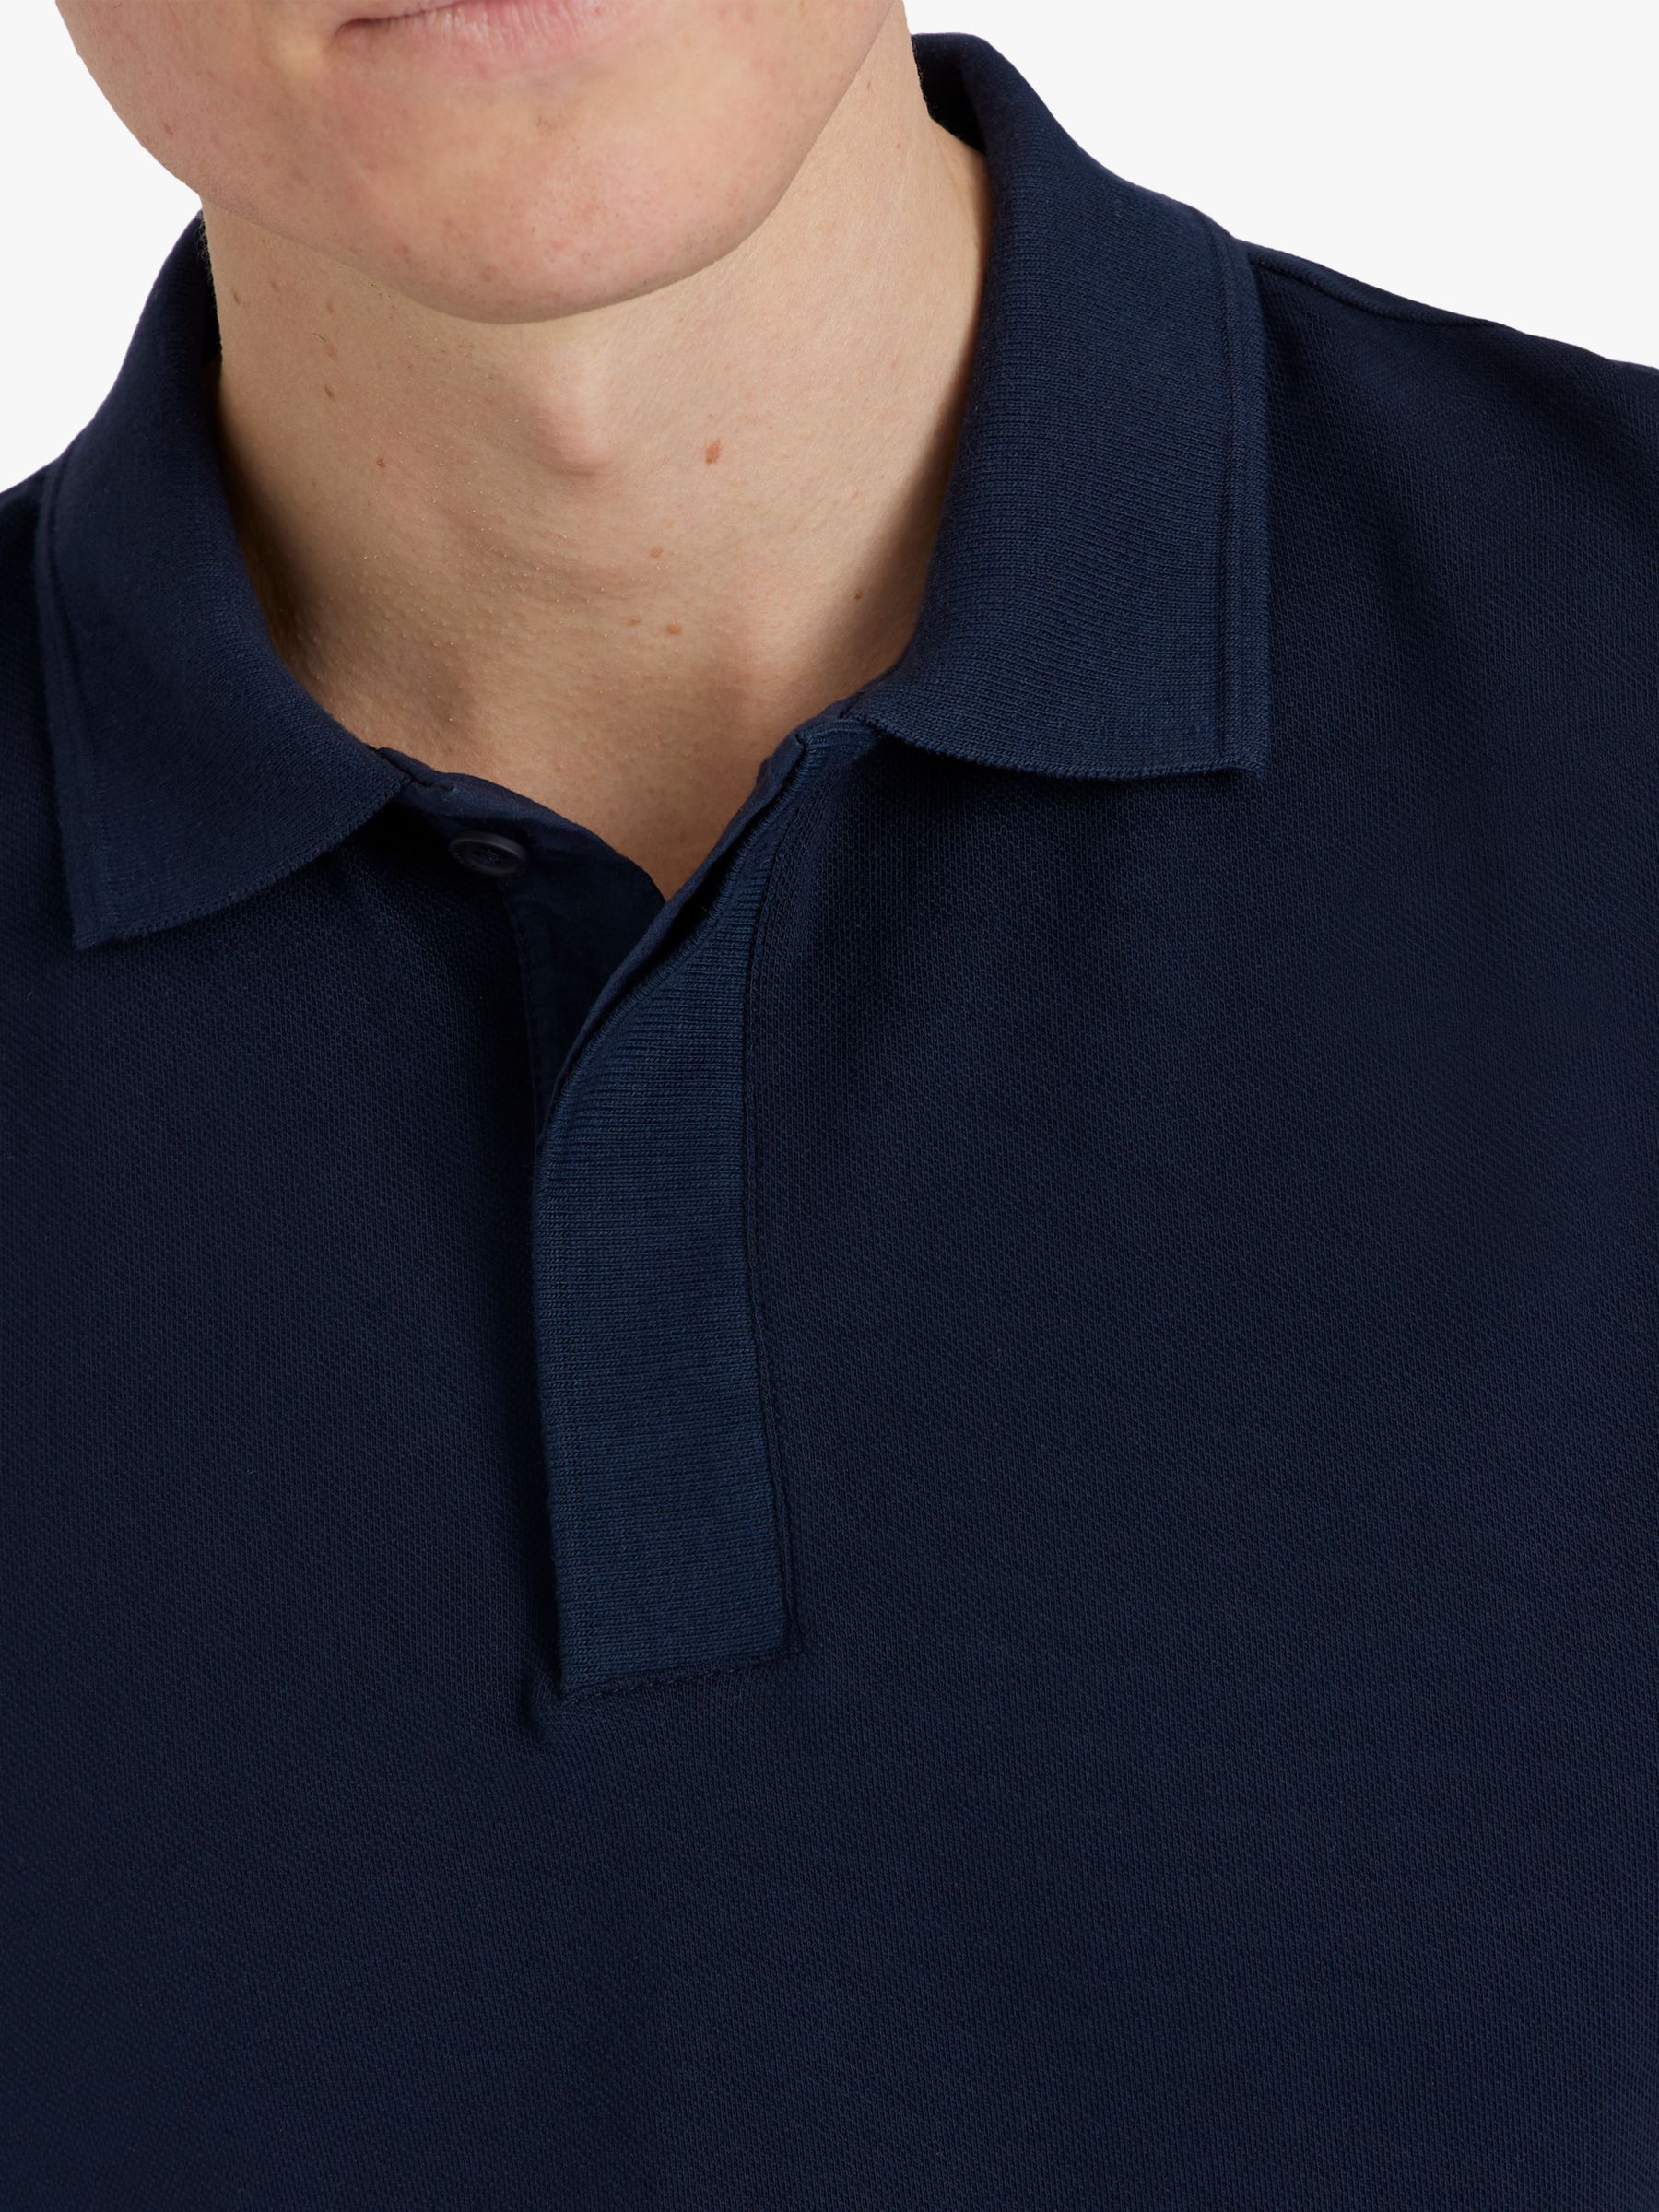 SPOKE Organic Polo Slim Fit Shirt, Dark Navy, S Short